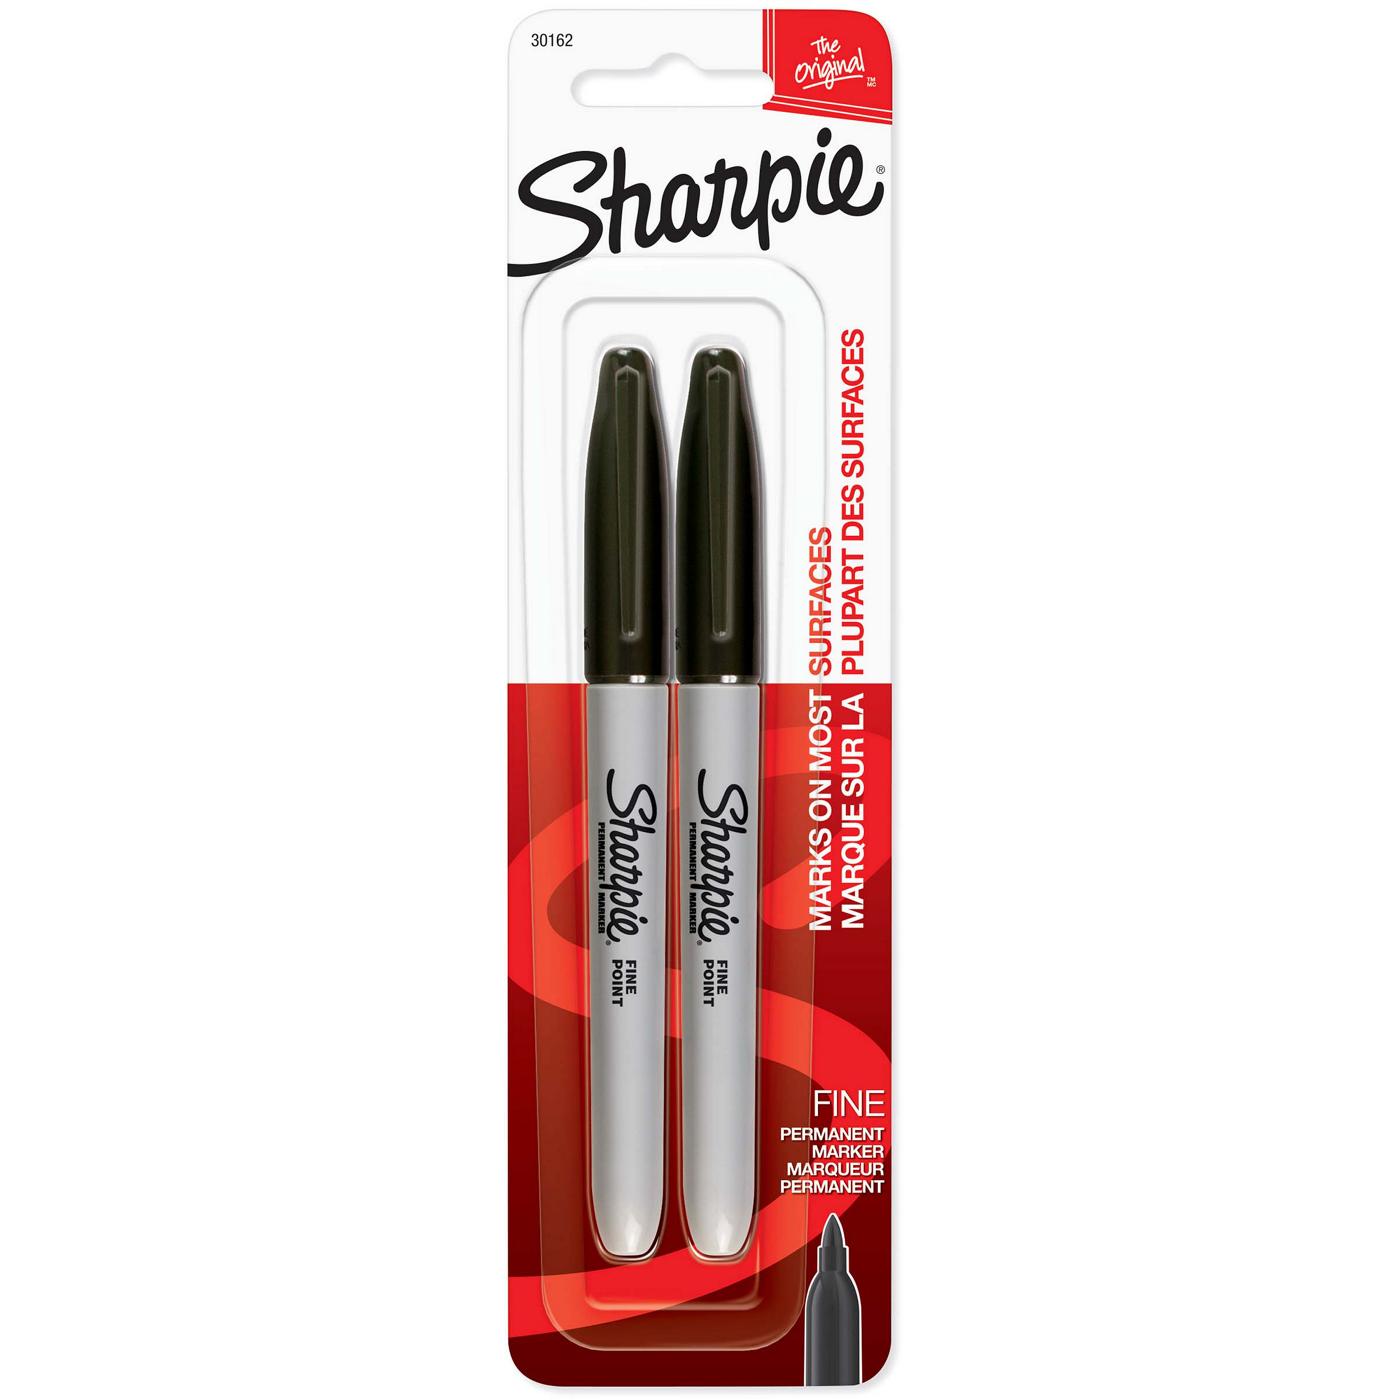 Sharpie Fine Tip Permanent Markers - Black Ink; image 1 of 3